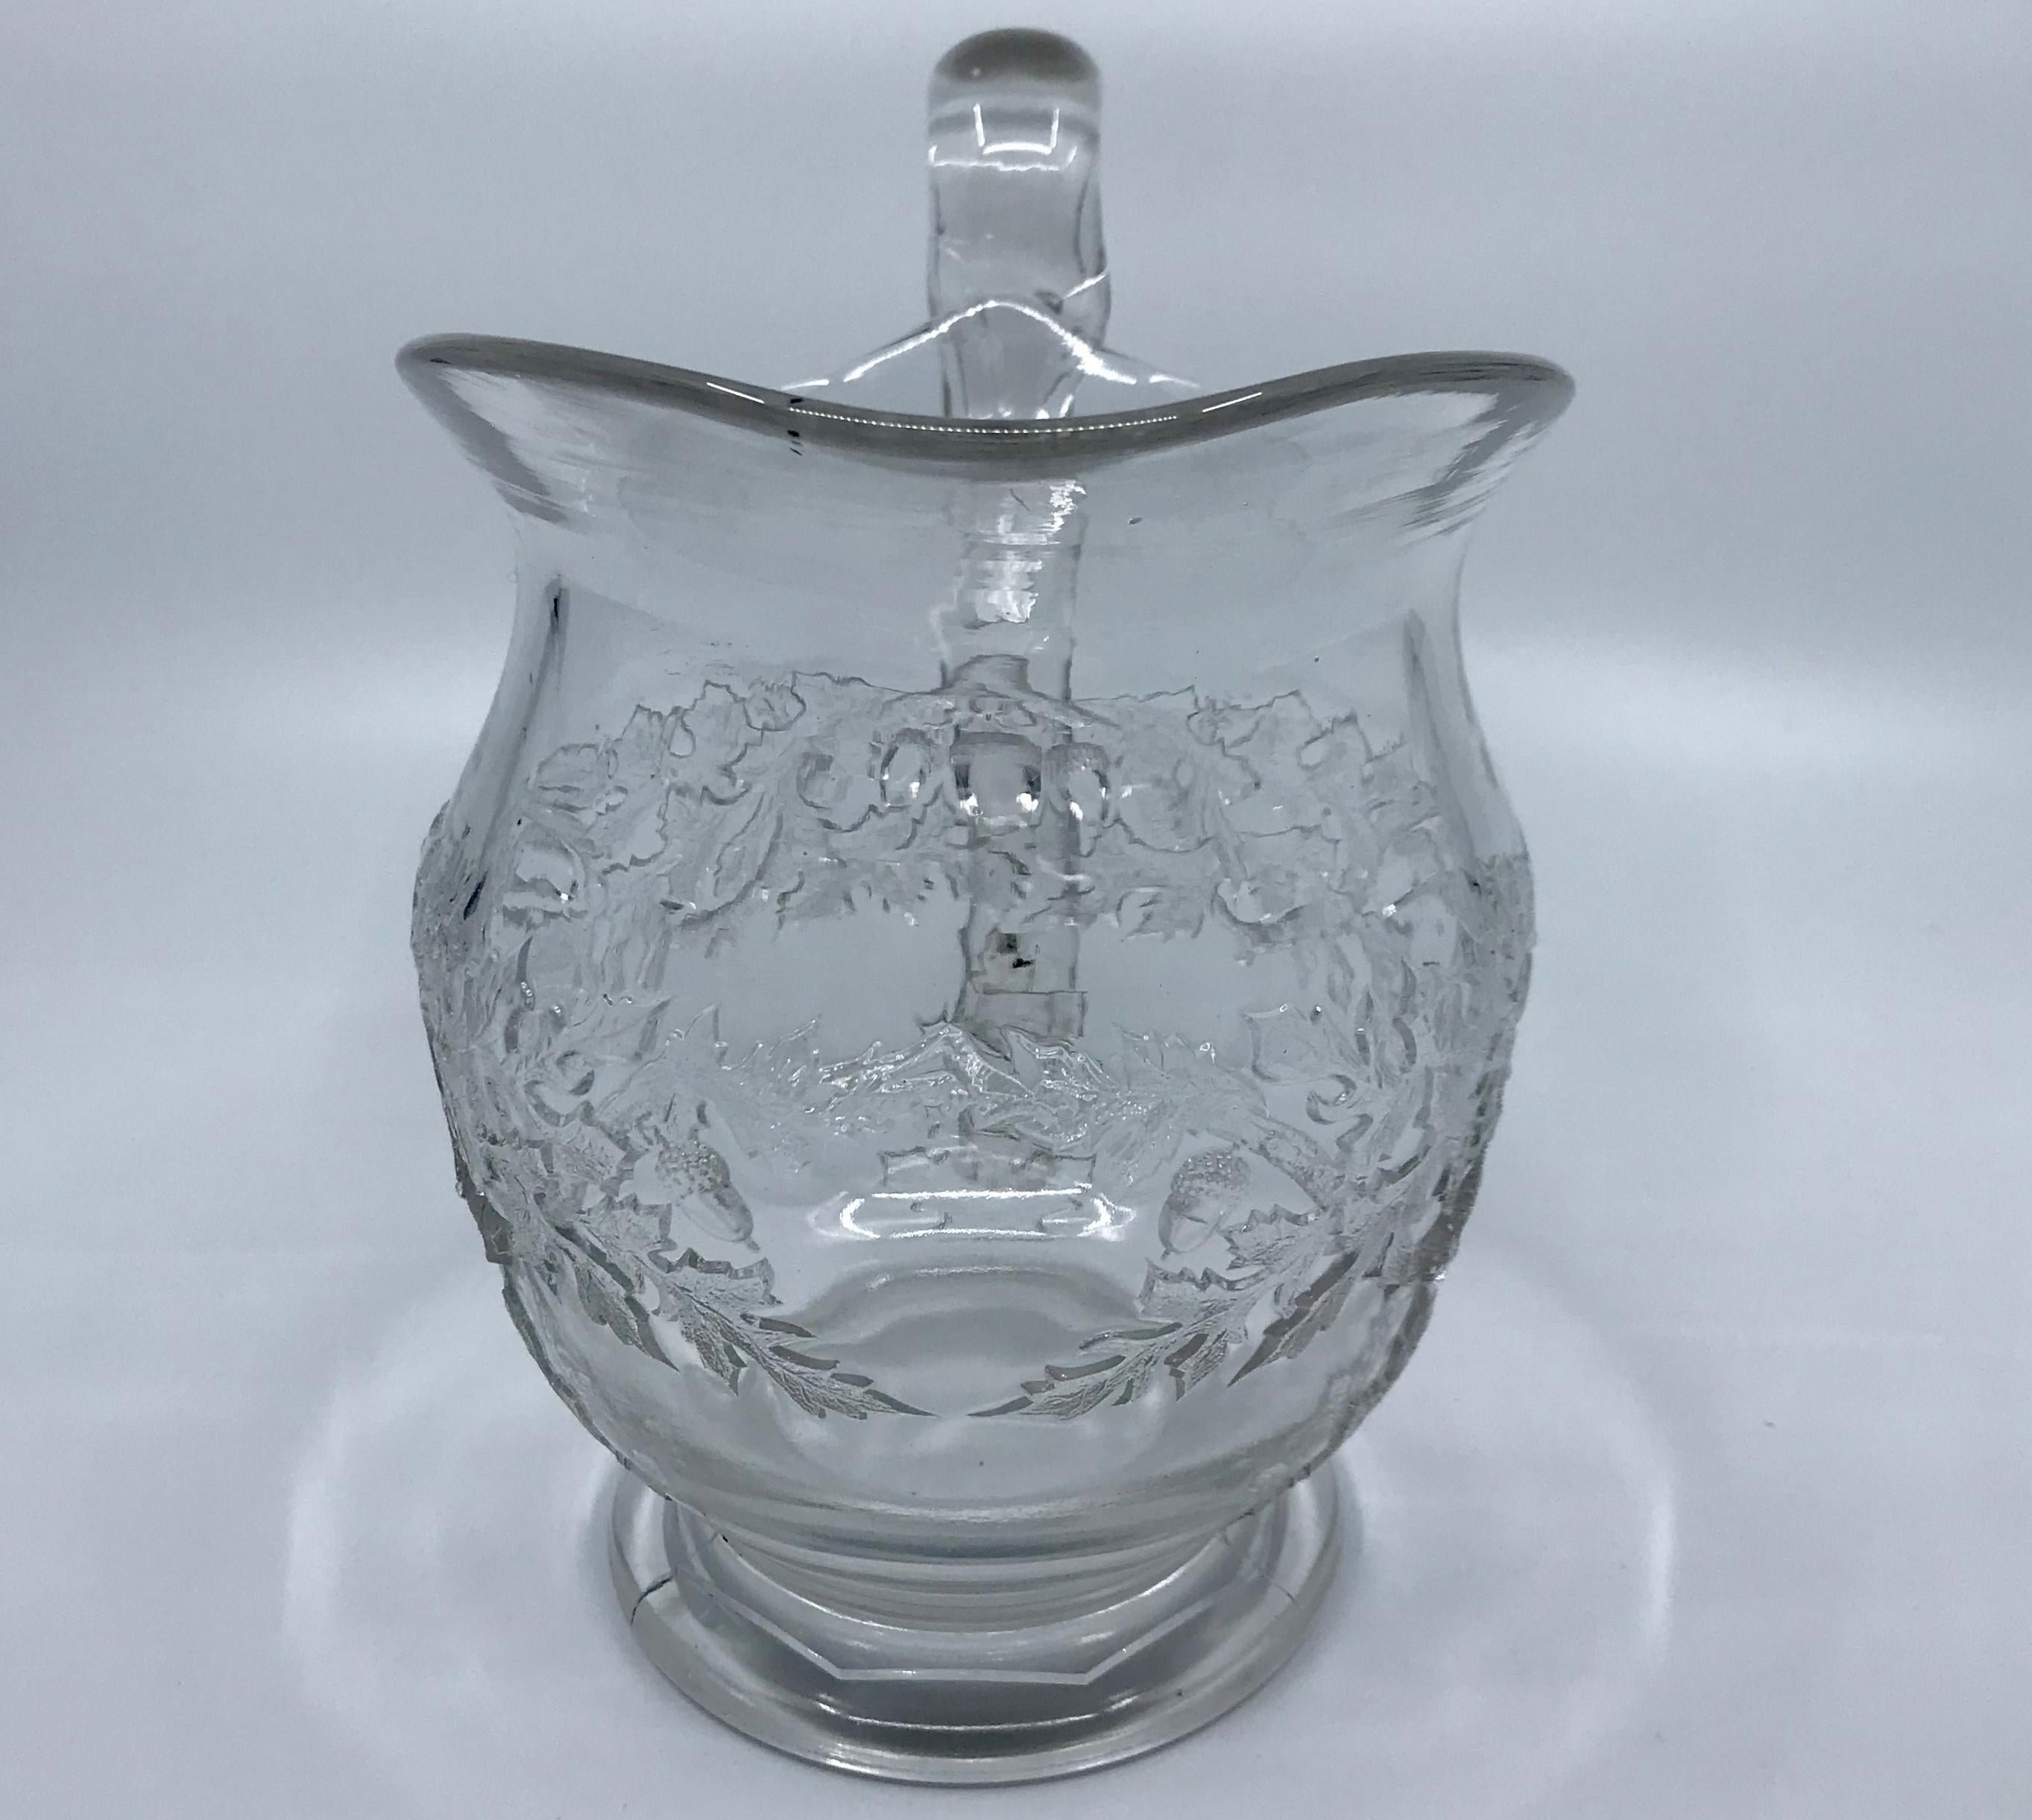 Pressed glass acorn and oak leaf pitcher. Hand blown and pressed glass pitcher with an oak leaf and acorn motif, United States, 1850s.
Dimensions: 7.75